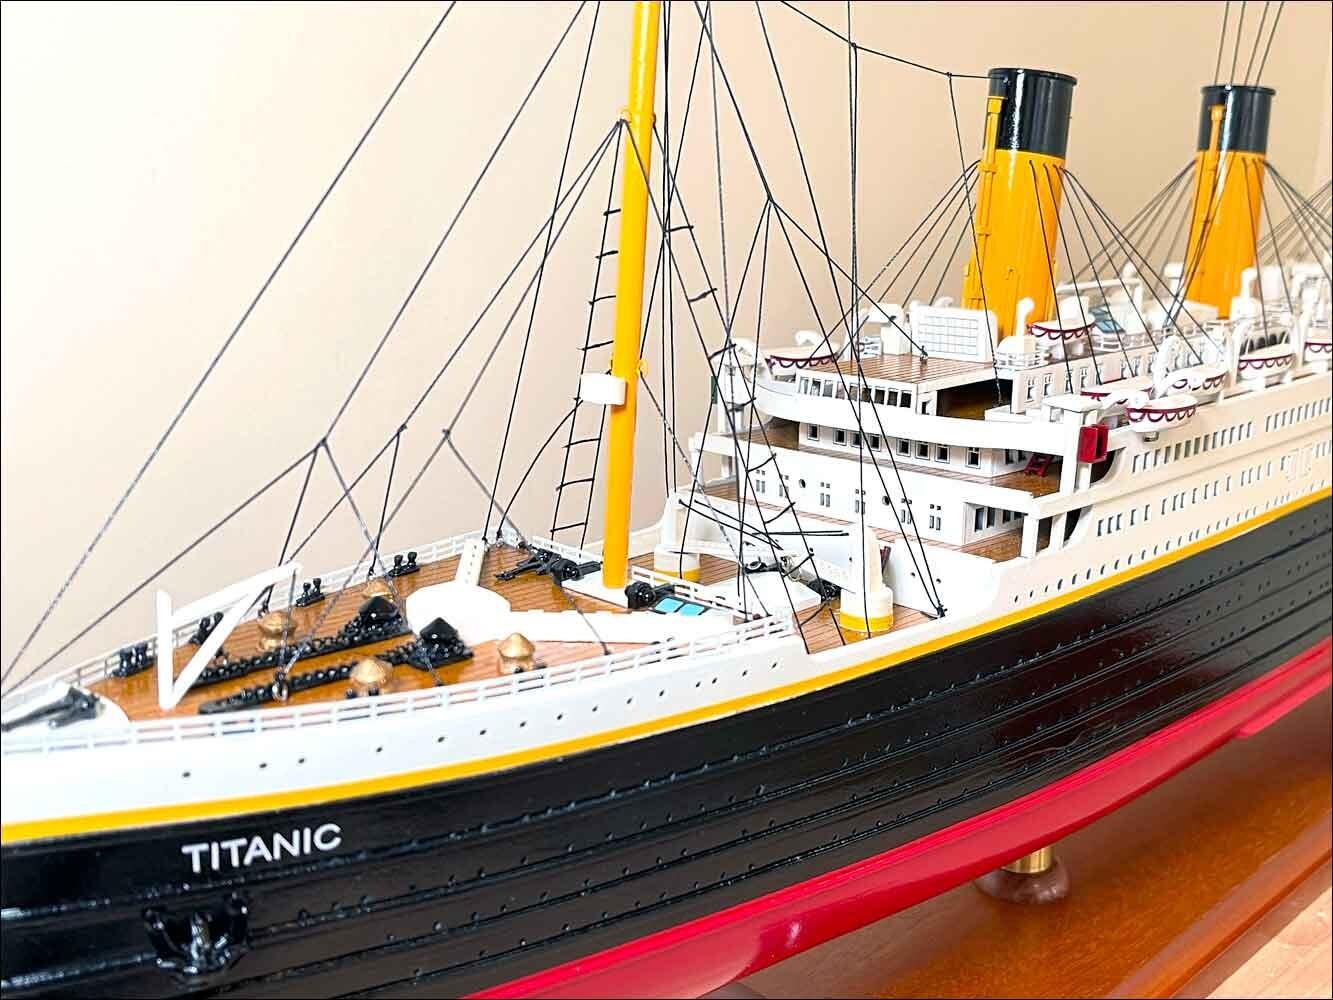 Titanic display model made of wood